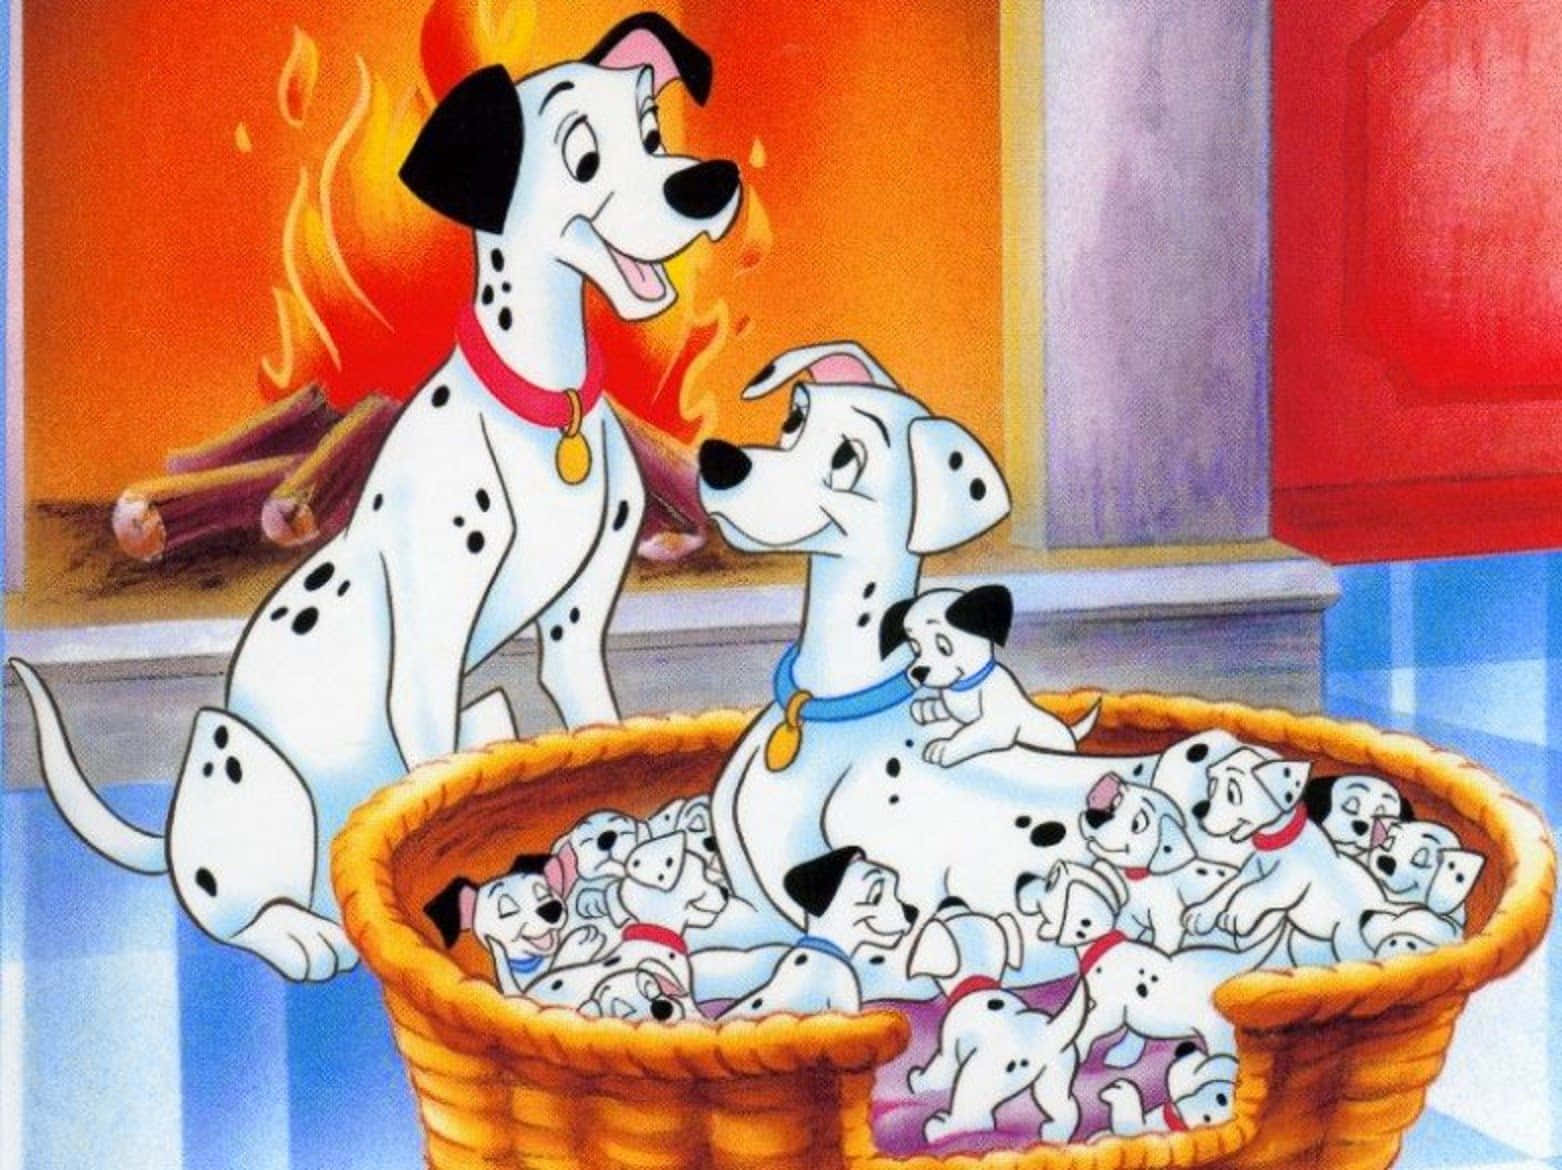 Enklassisk Disney-favorit, 101 Dalmatiner.